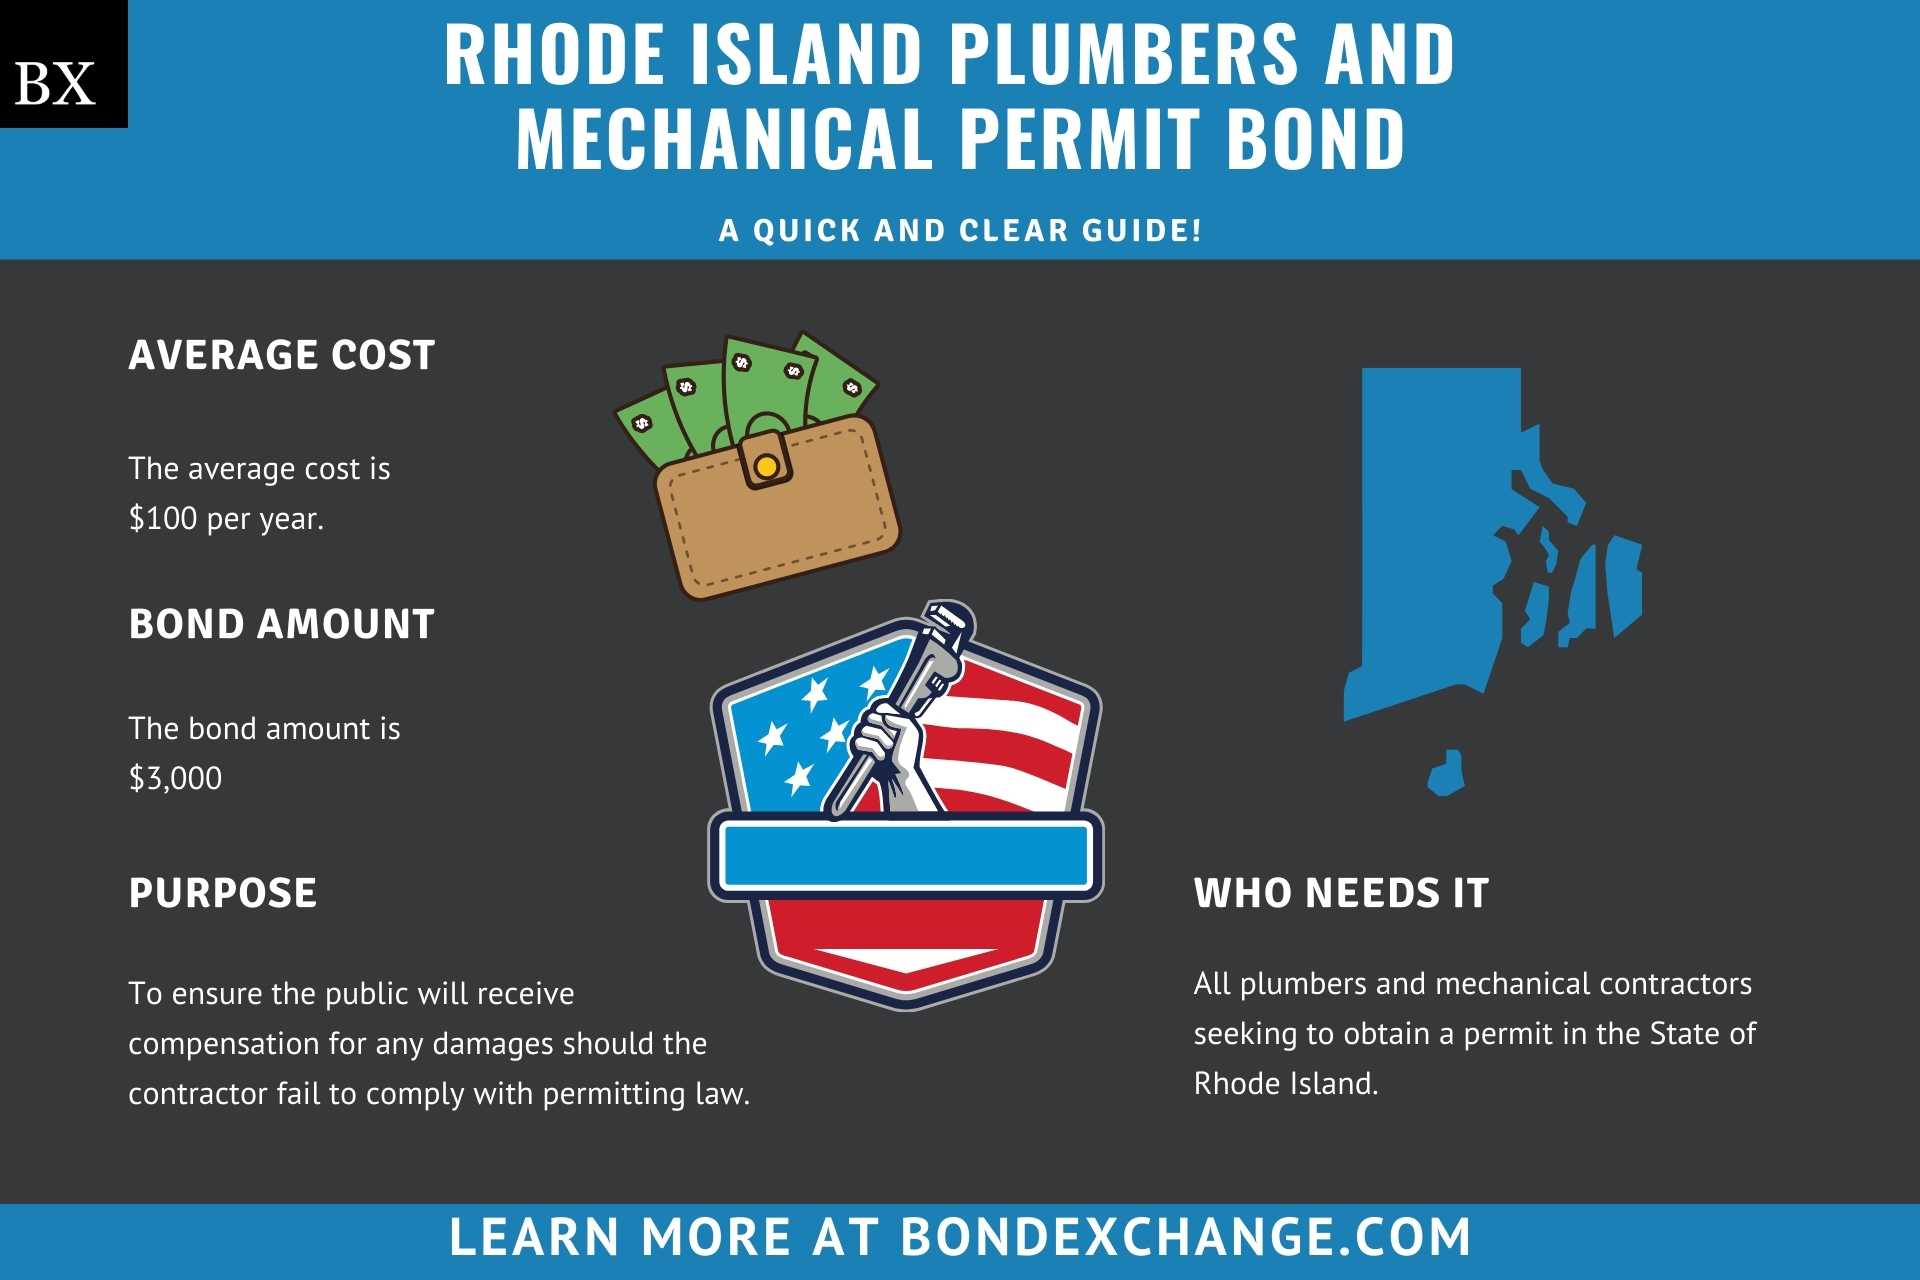 Rhode Island Plumbers and Mechanical Permit Bond